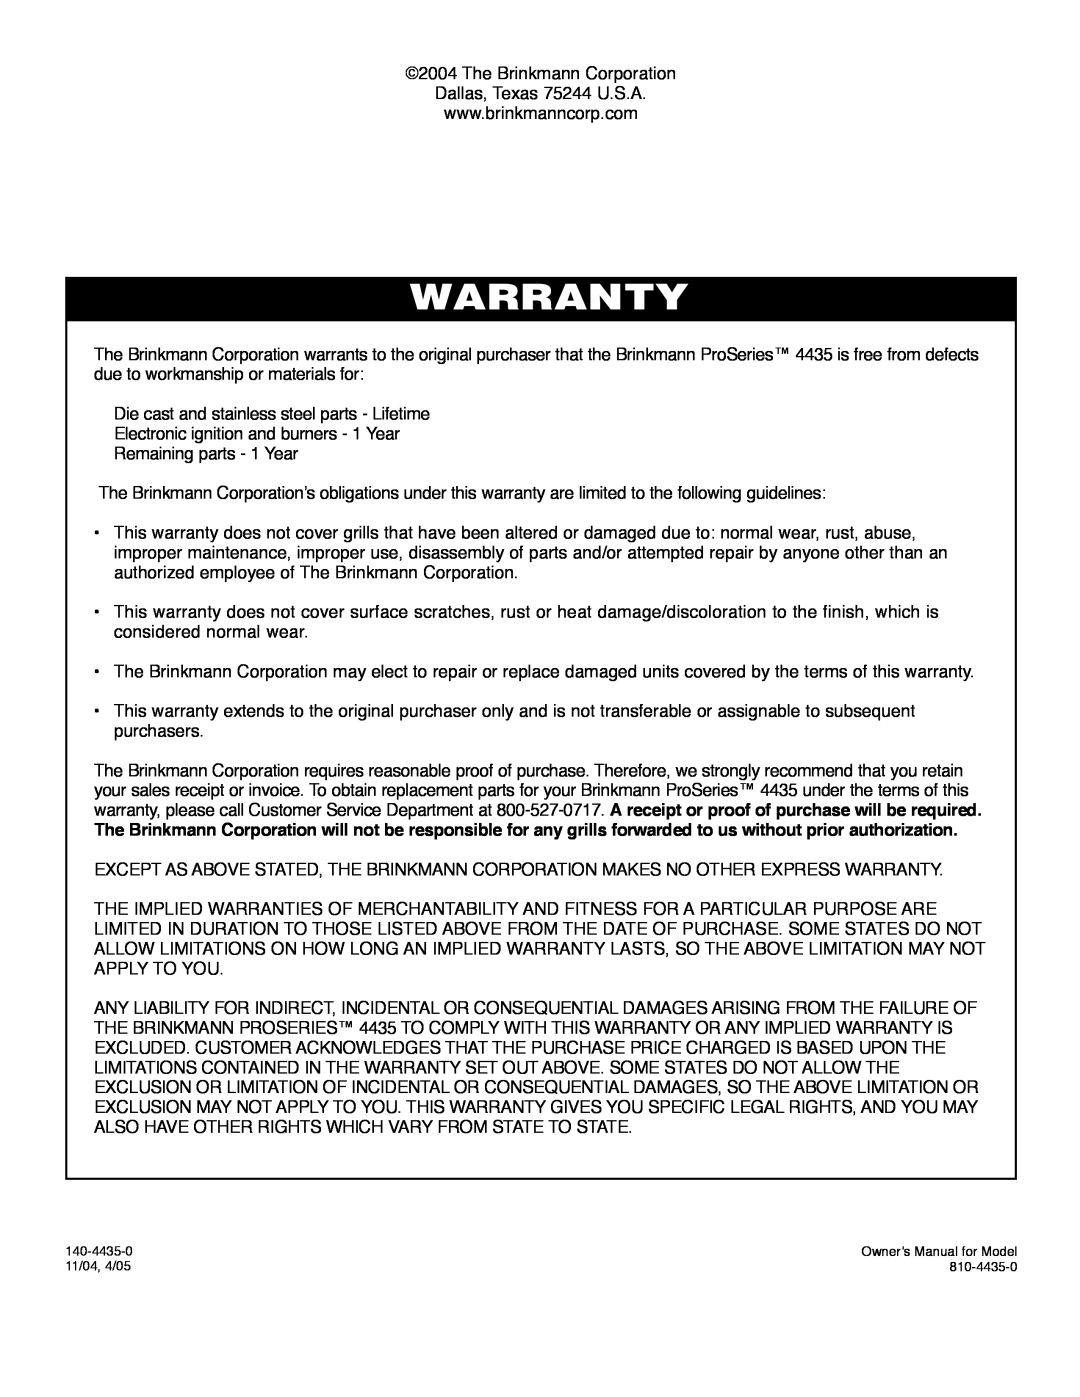 Brinkmann ProSeries 4435 owner manual Warranty 